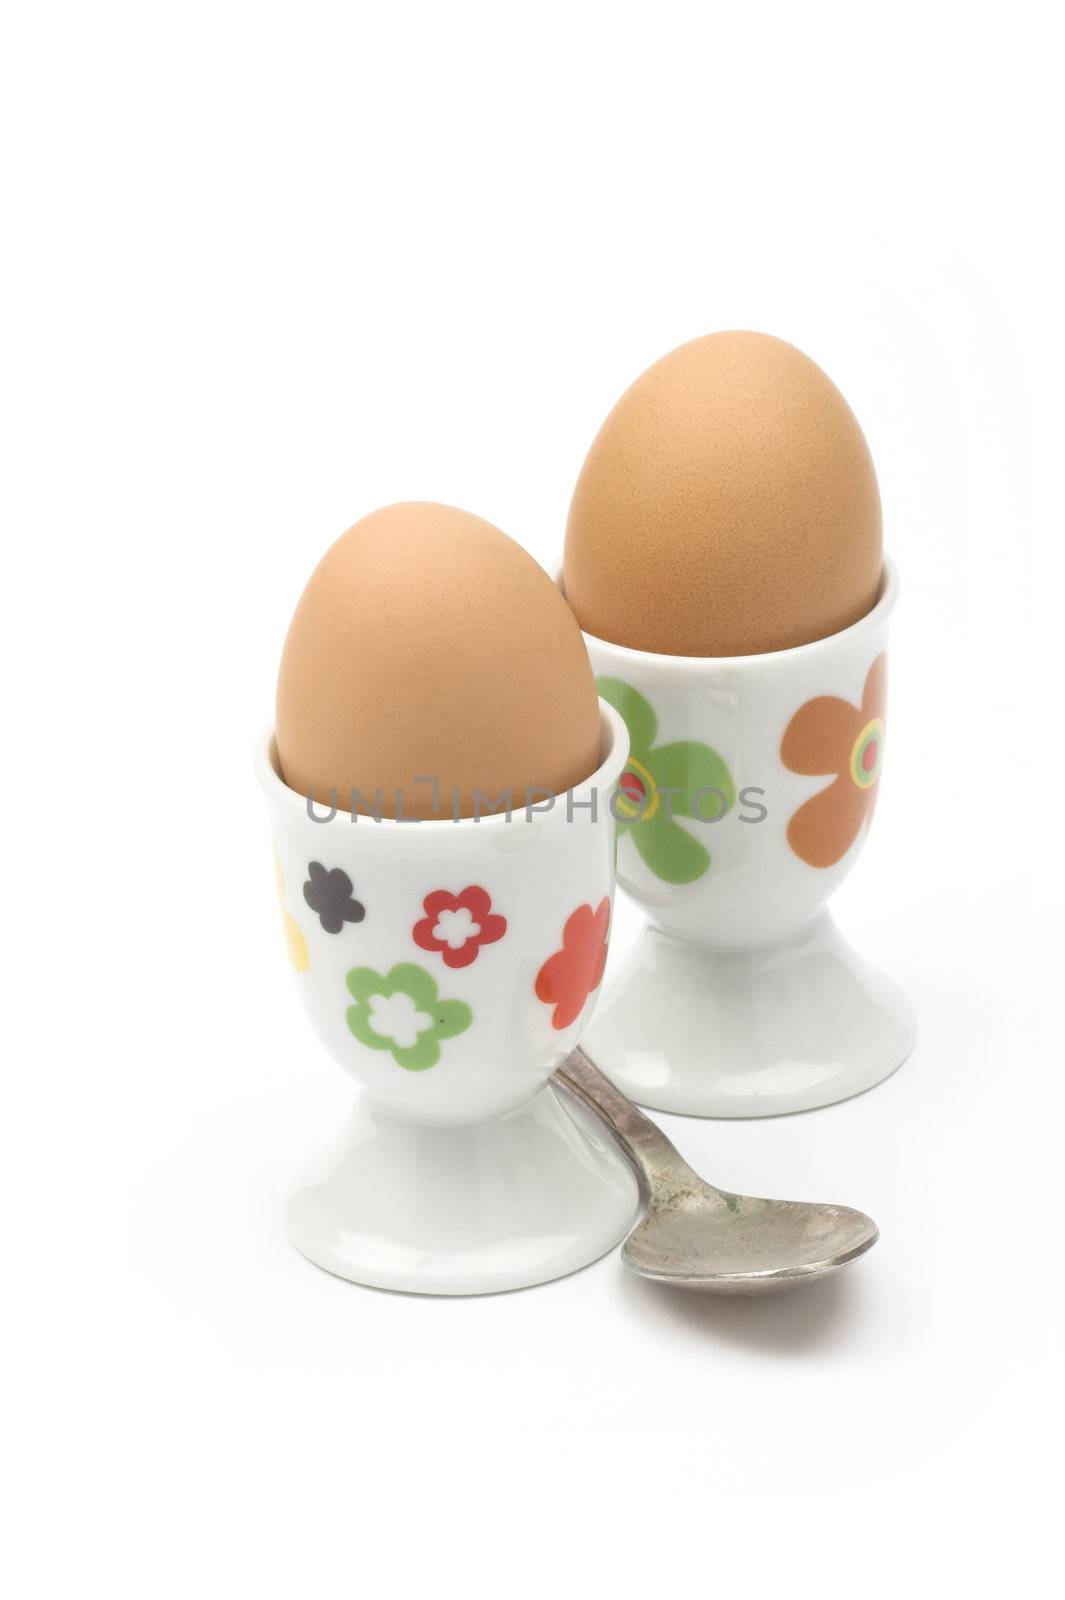 Boiled eggs in cups by alexkosev